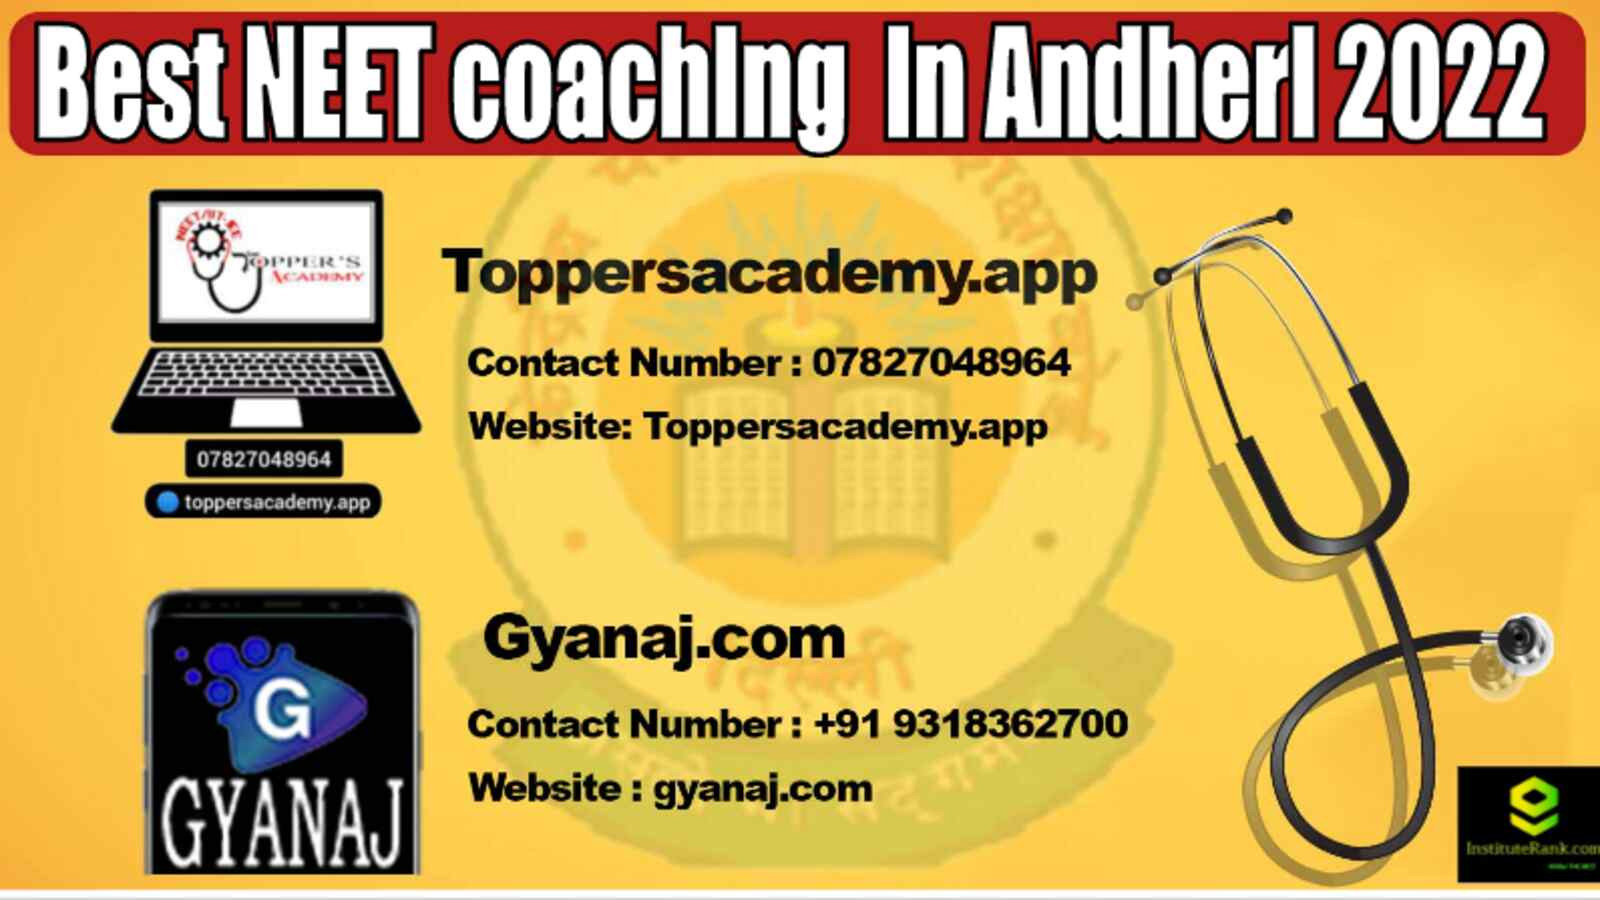 Best NEET coaching in Andheri 2022